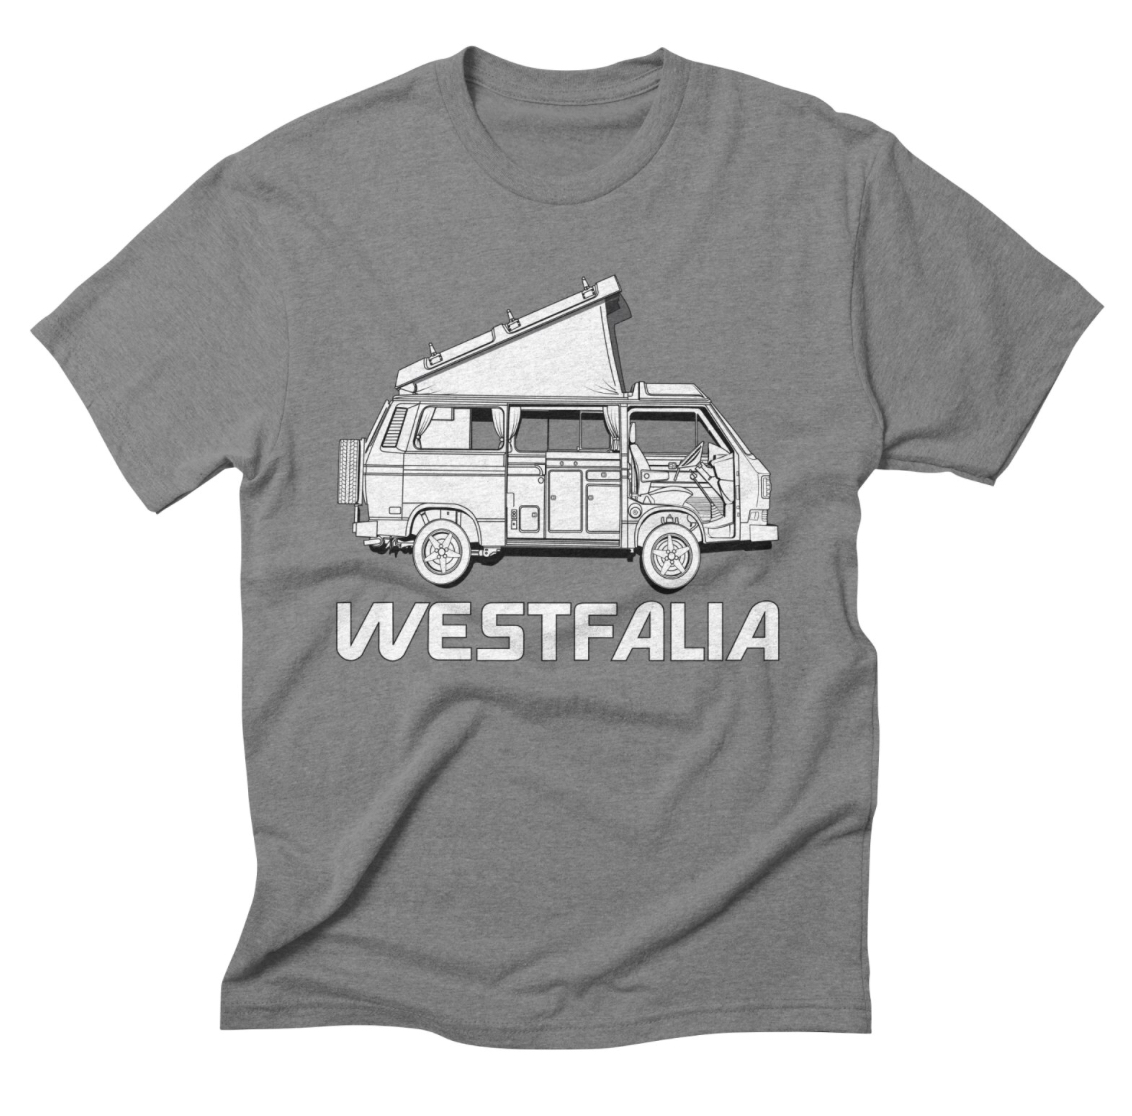 The VW Vanagon Westfalia Shirt - Fresh 